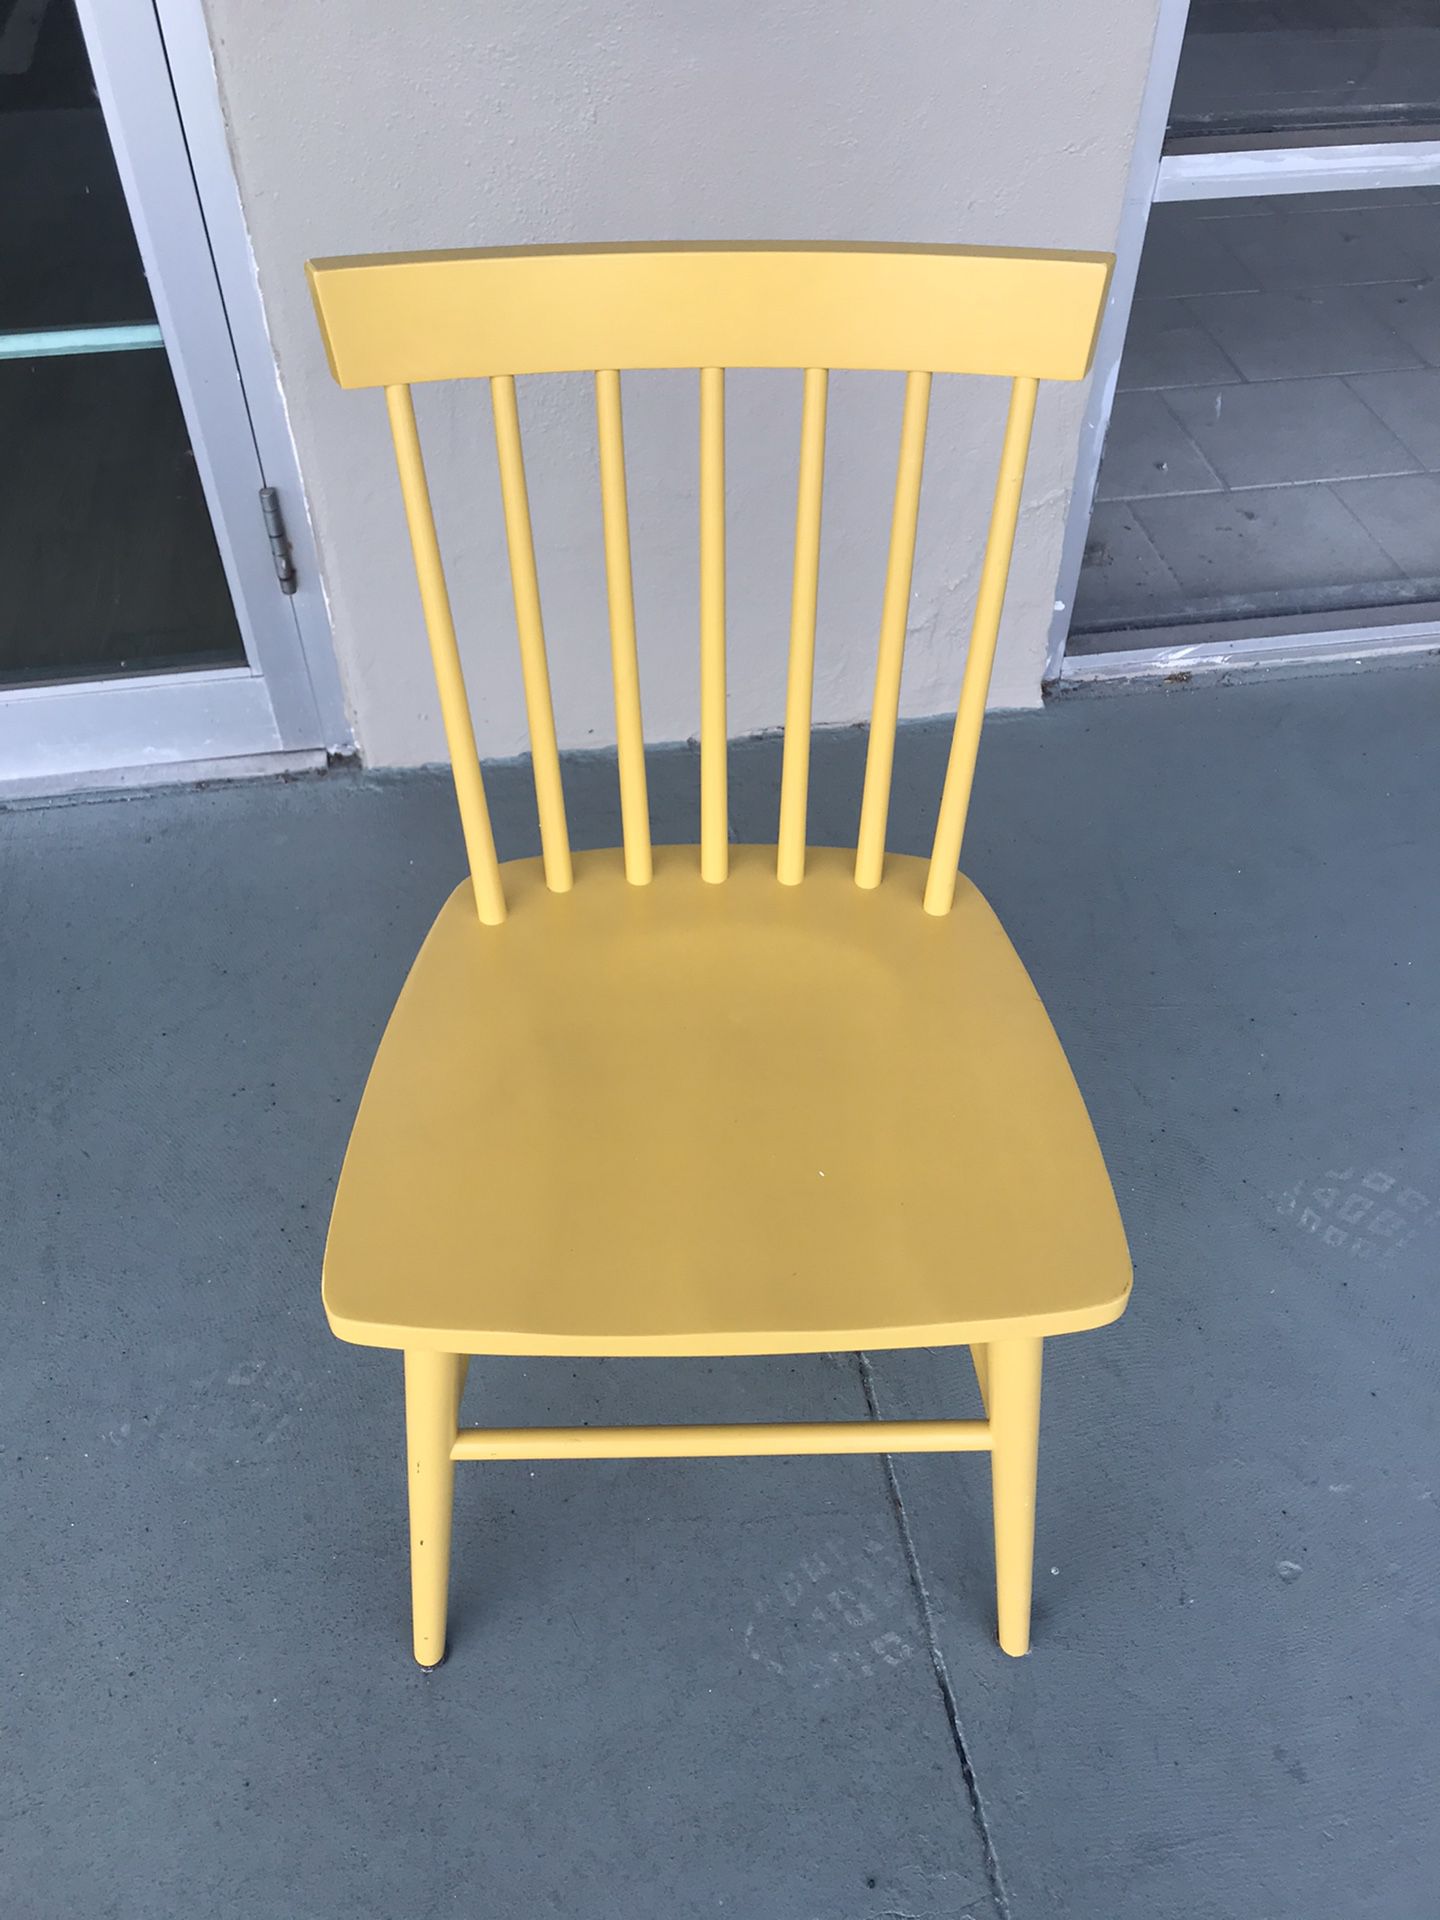 2 Yellow chairs